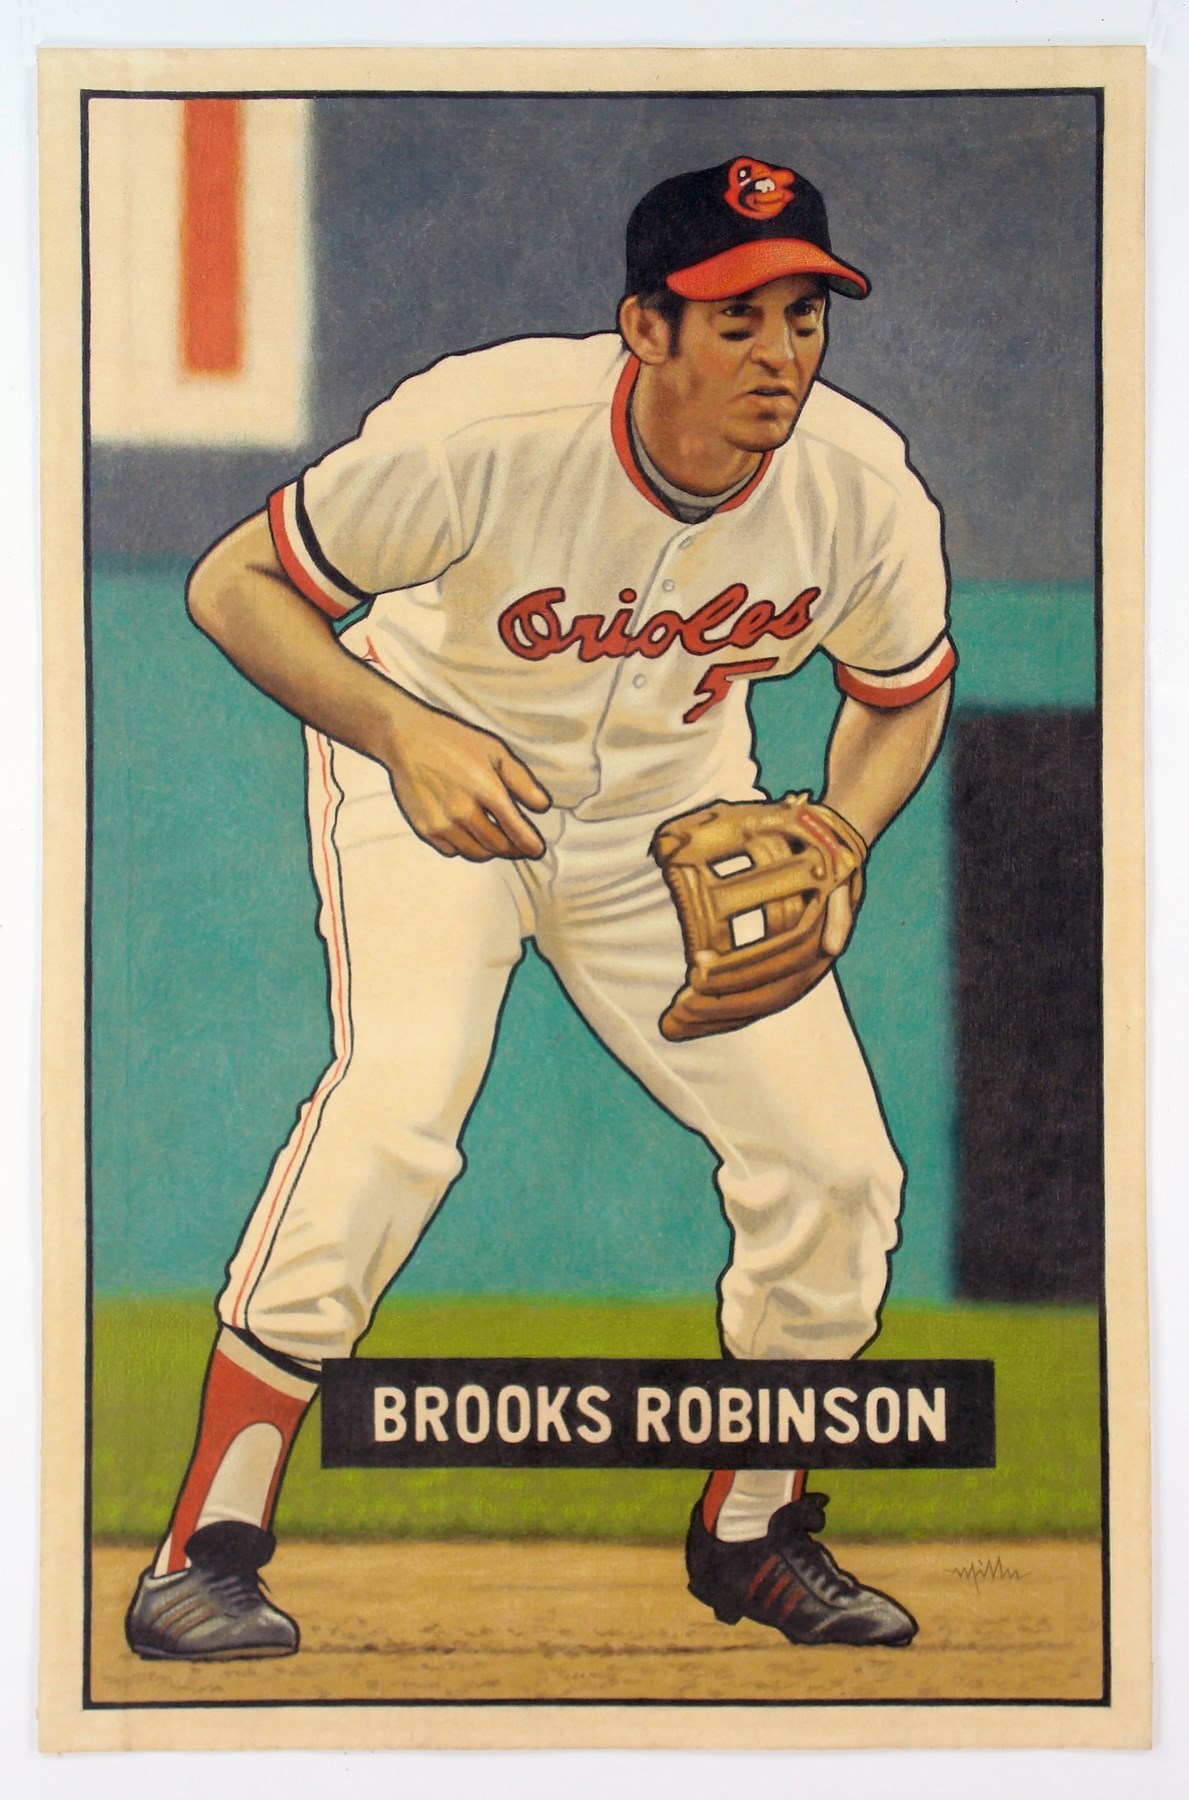 Baseball Memorabilia - “BROOKS ROBINSON (1951 Bowman)” by Arthur K Miller